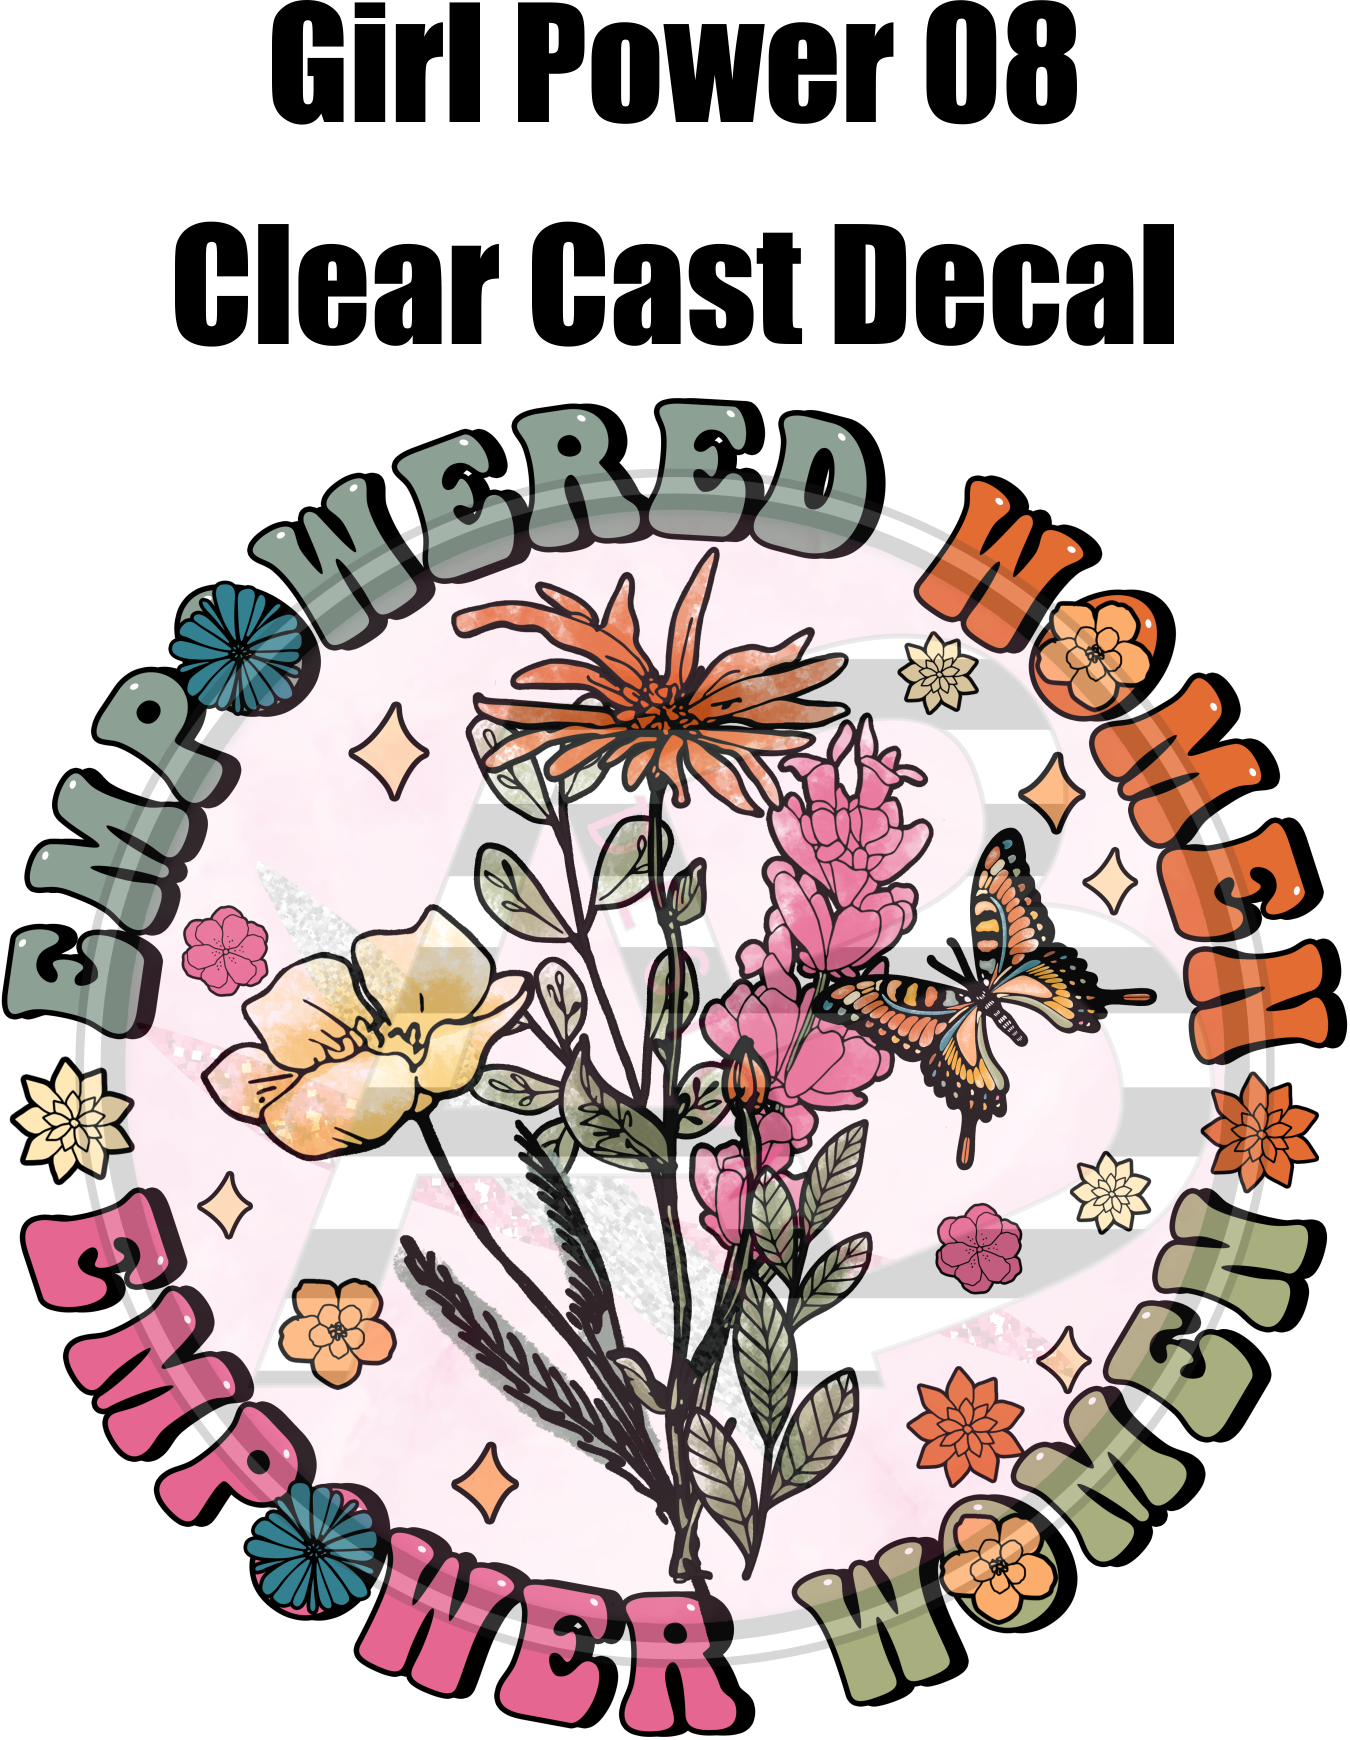 Girl Power 08 - Clear Cast Decal